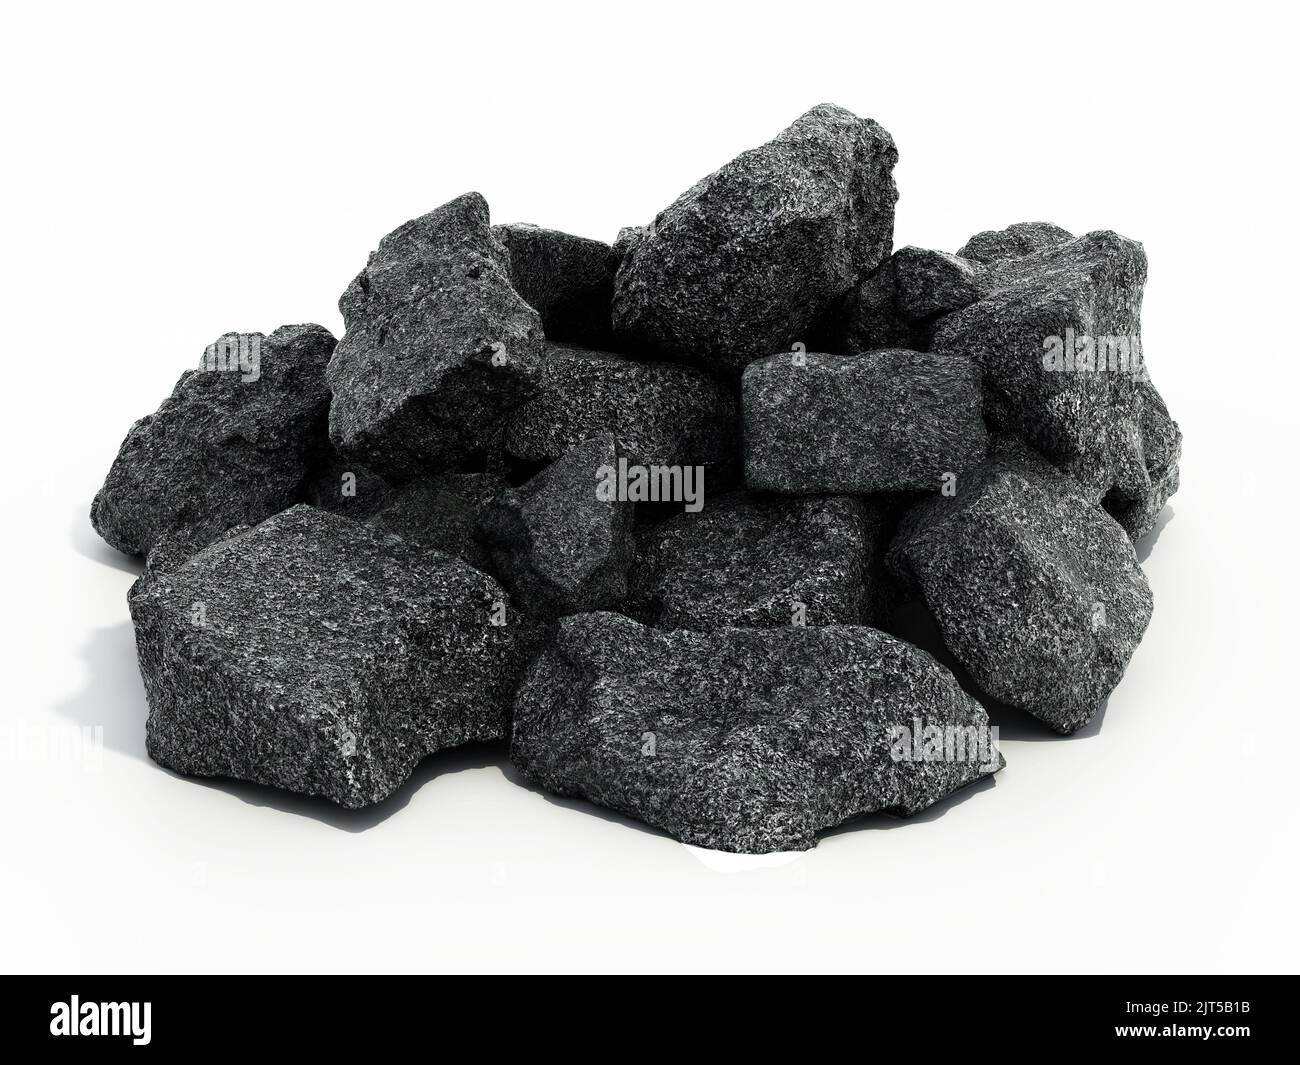 Group of stones isolated on white background. 3D illustration. Stock Photo